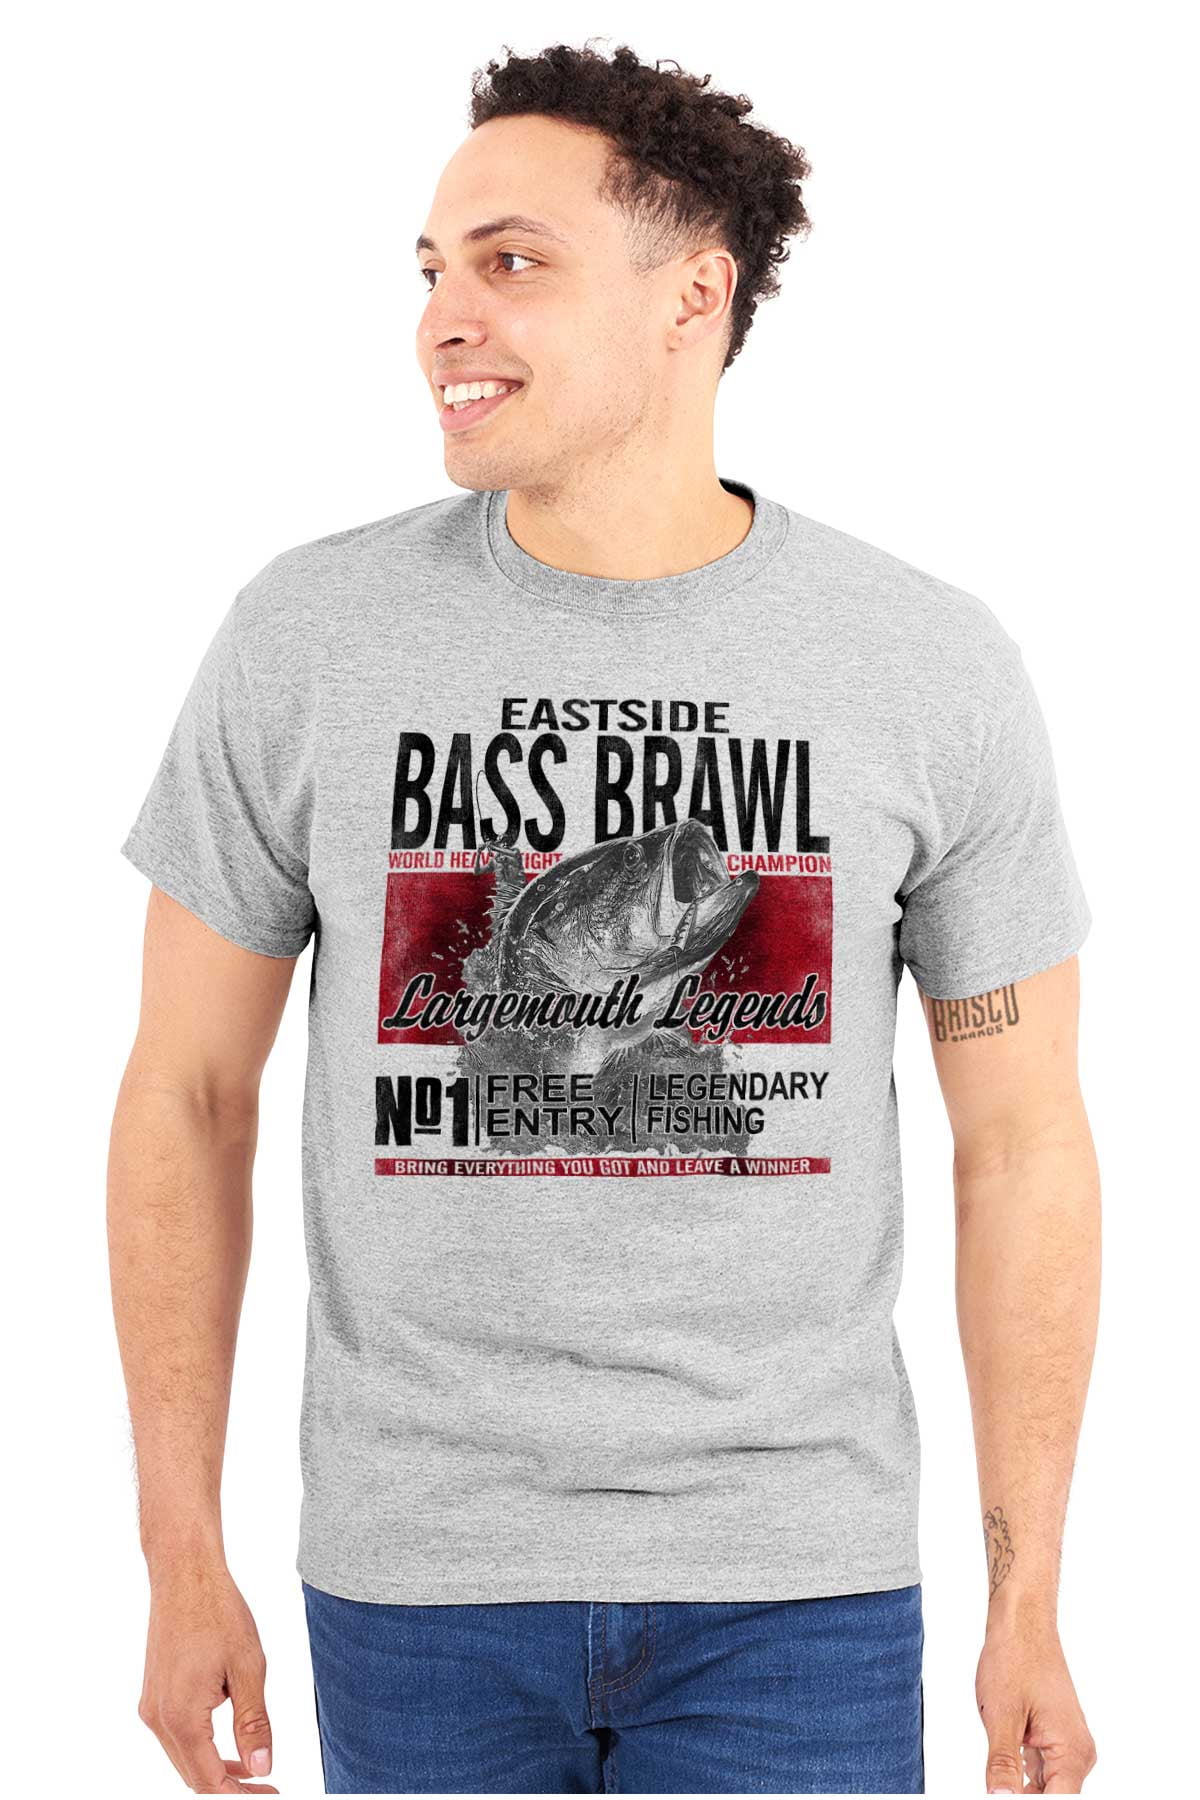 Bass Brawl Fishing Funny Fisherman Men's Graphic T Shirt Tees